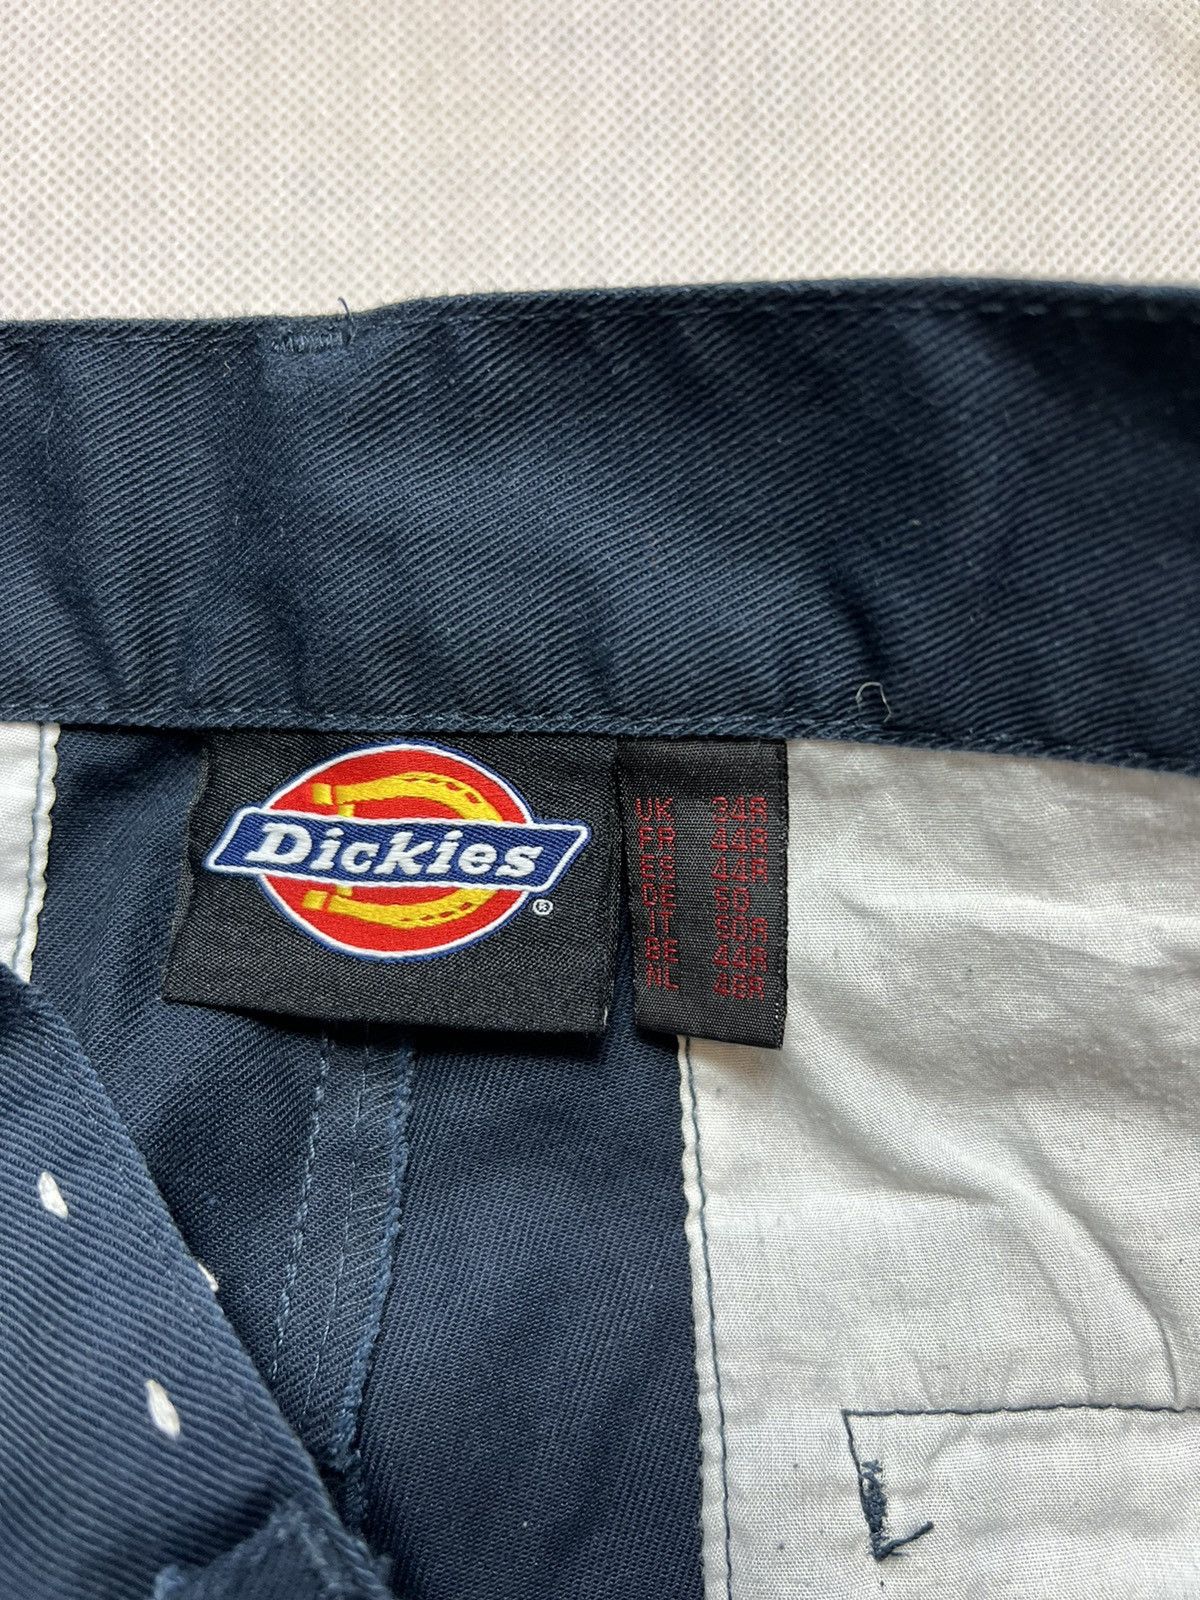 Vintage Trousers Dickies vintage navy pocket Size US 34 / EU 50 - 4 Thumbnail